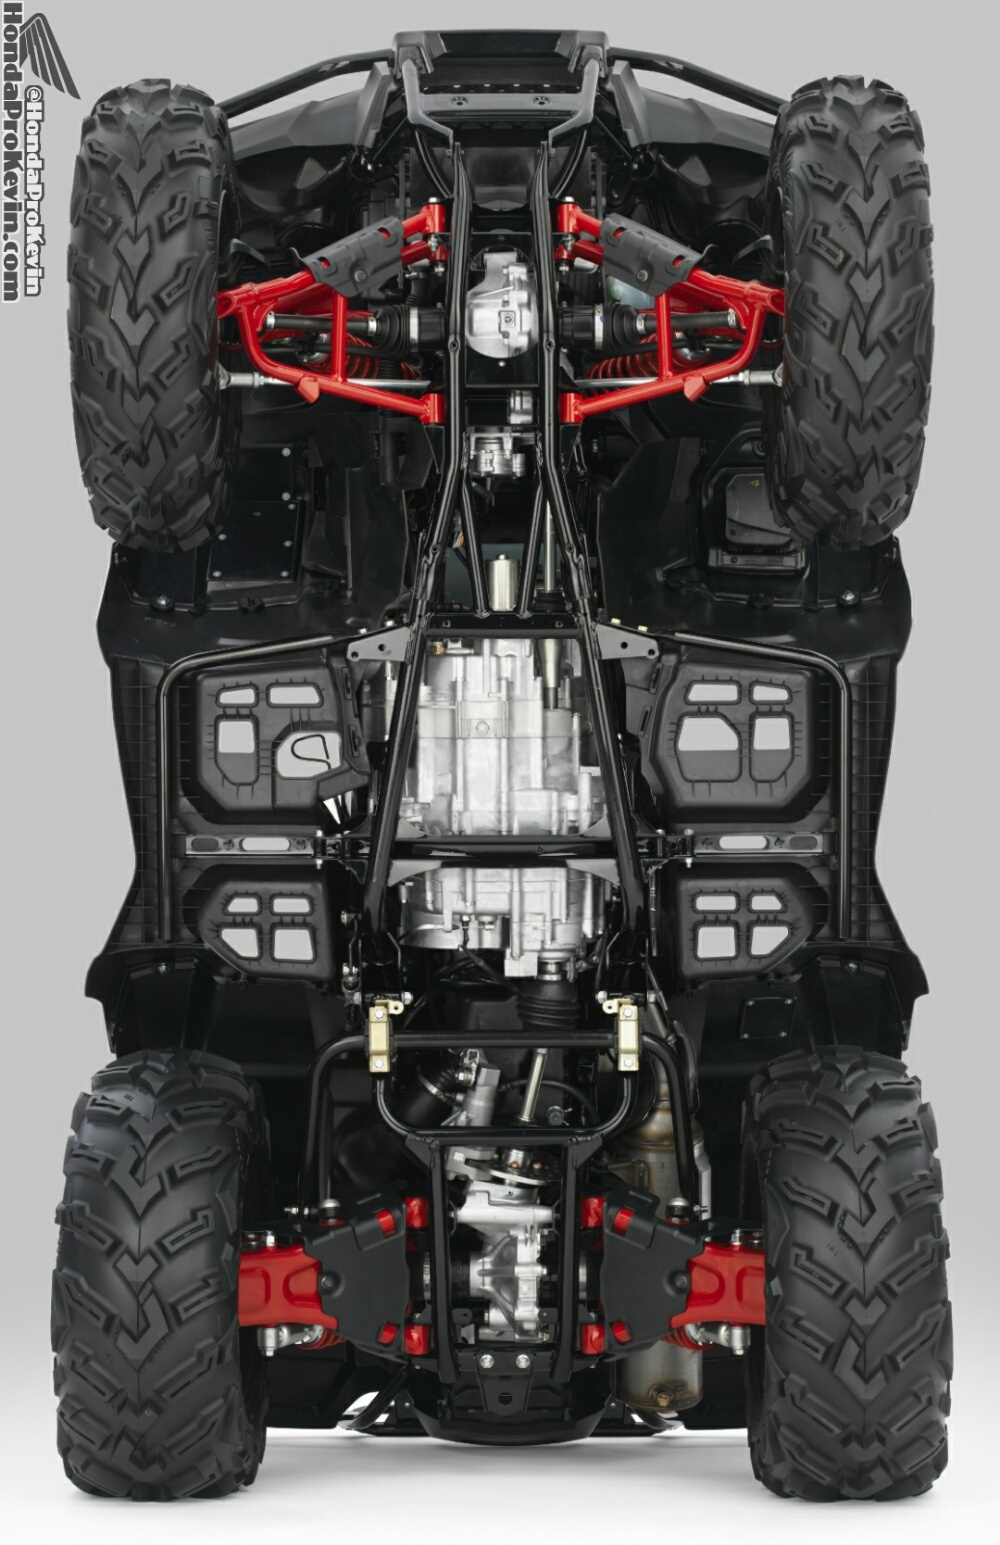 2005-2011 Honda Foreman TRX500 TRX 500 Quad ATV CLYMER REPAIR MANUAL M206